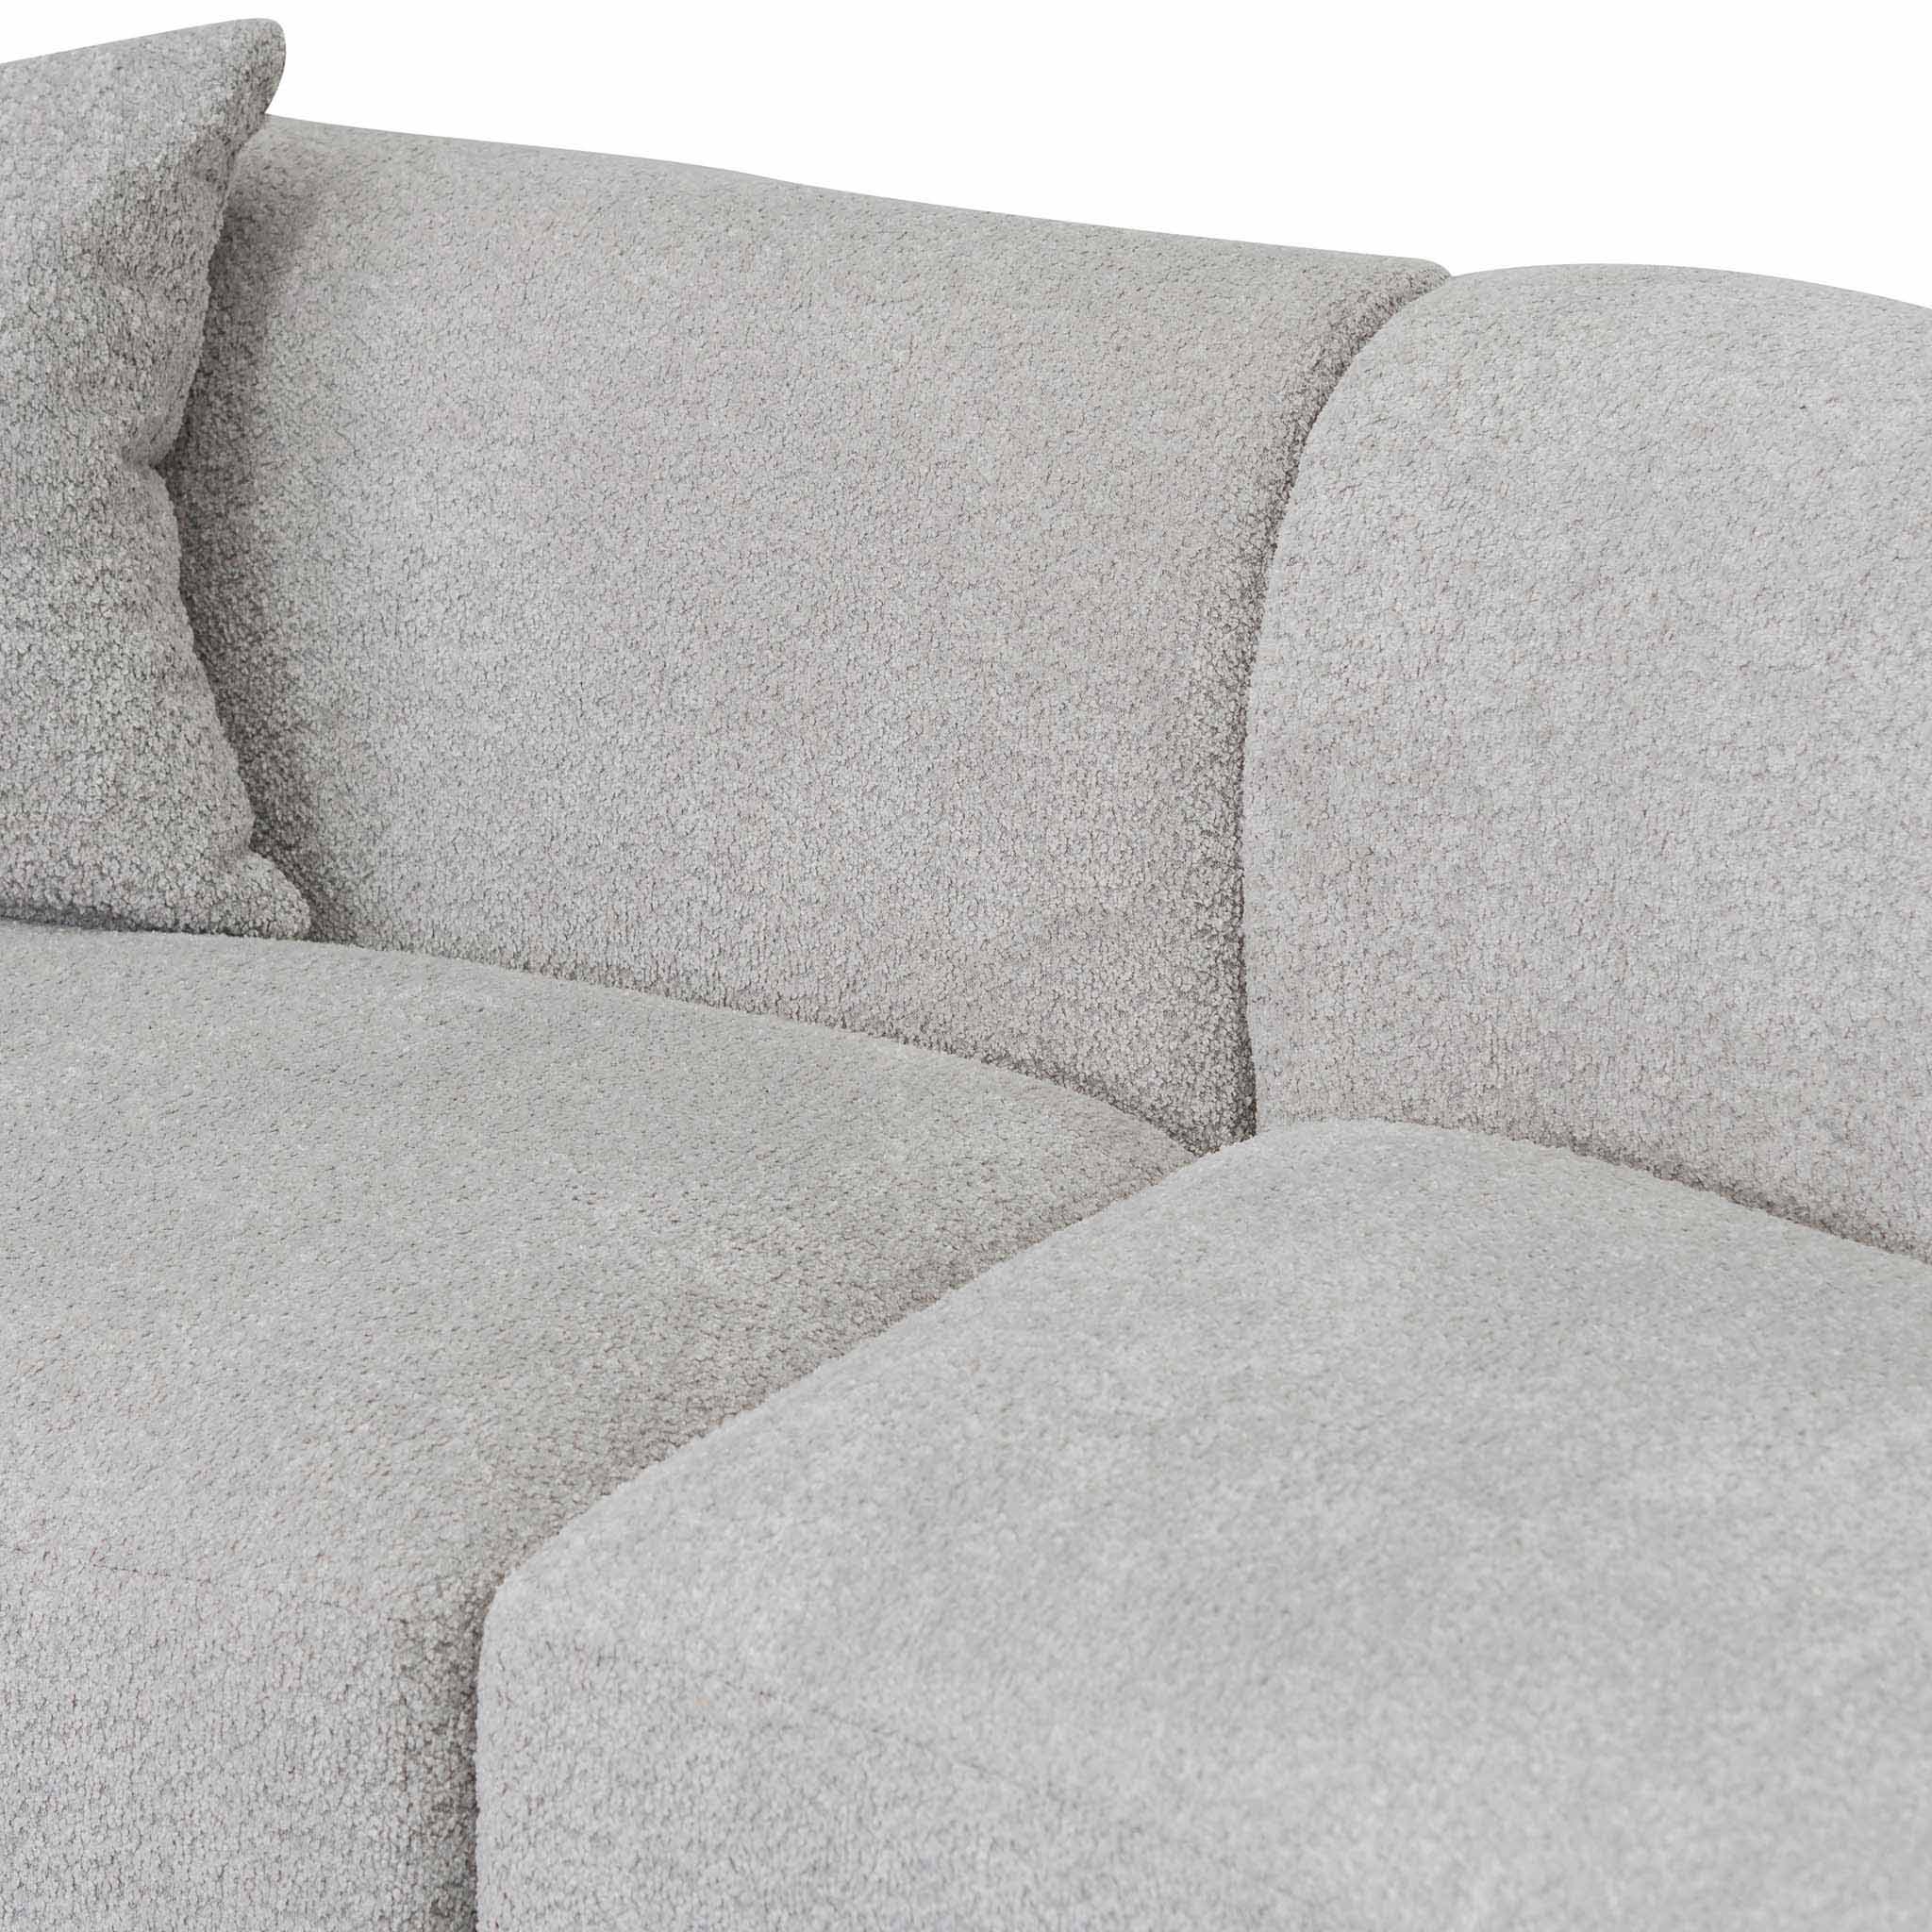 Camilla Left Chaise Sofa - Light Grey Boucle - Sofas